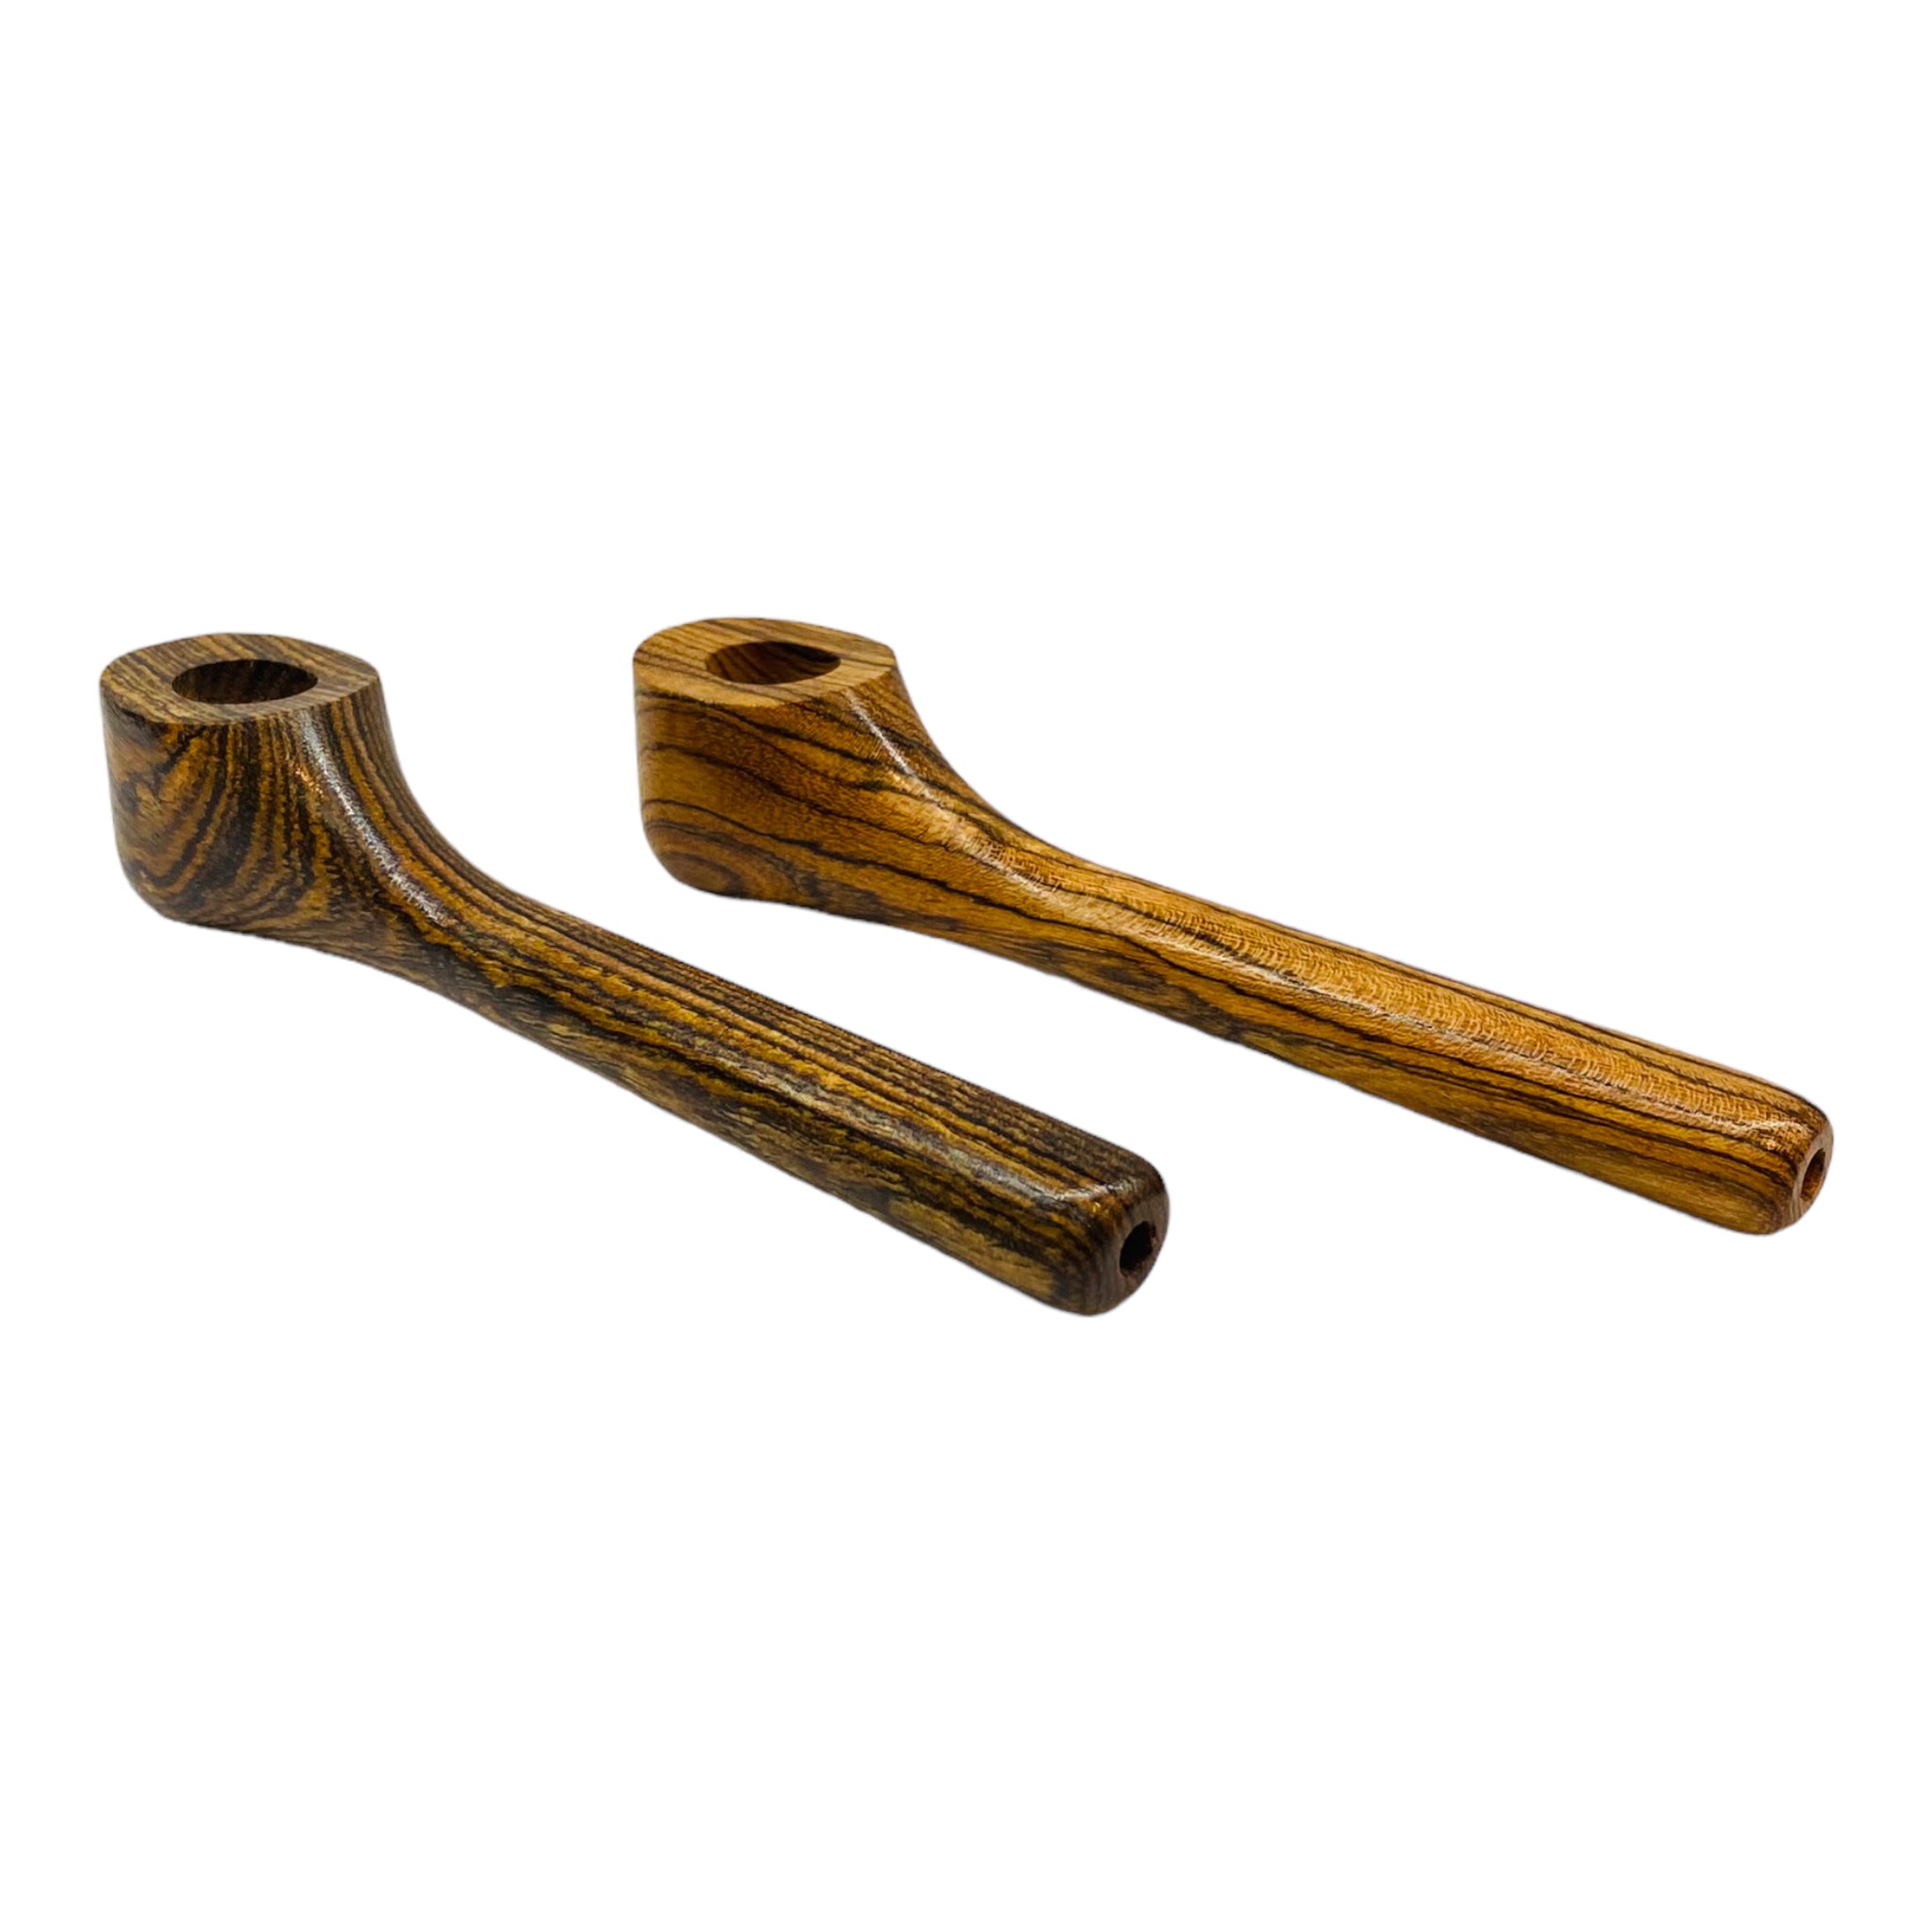 Wood Hand Pipe - Slender Stem Spoon Shaped Hand Pipe